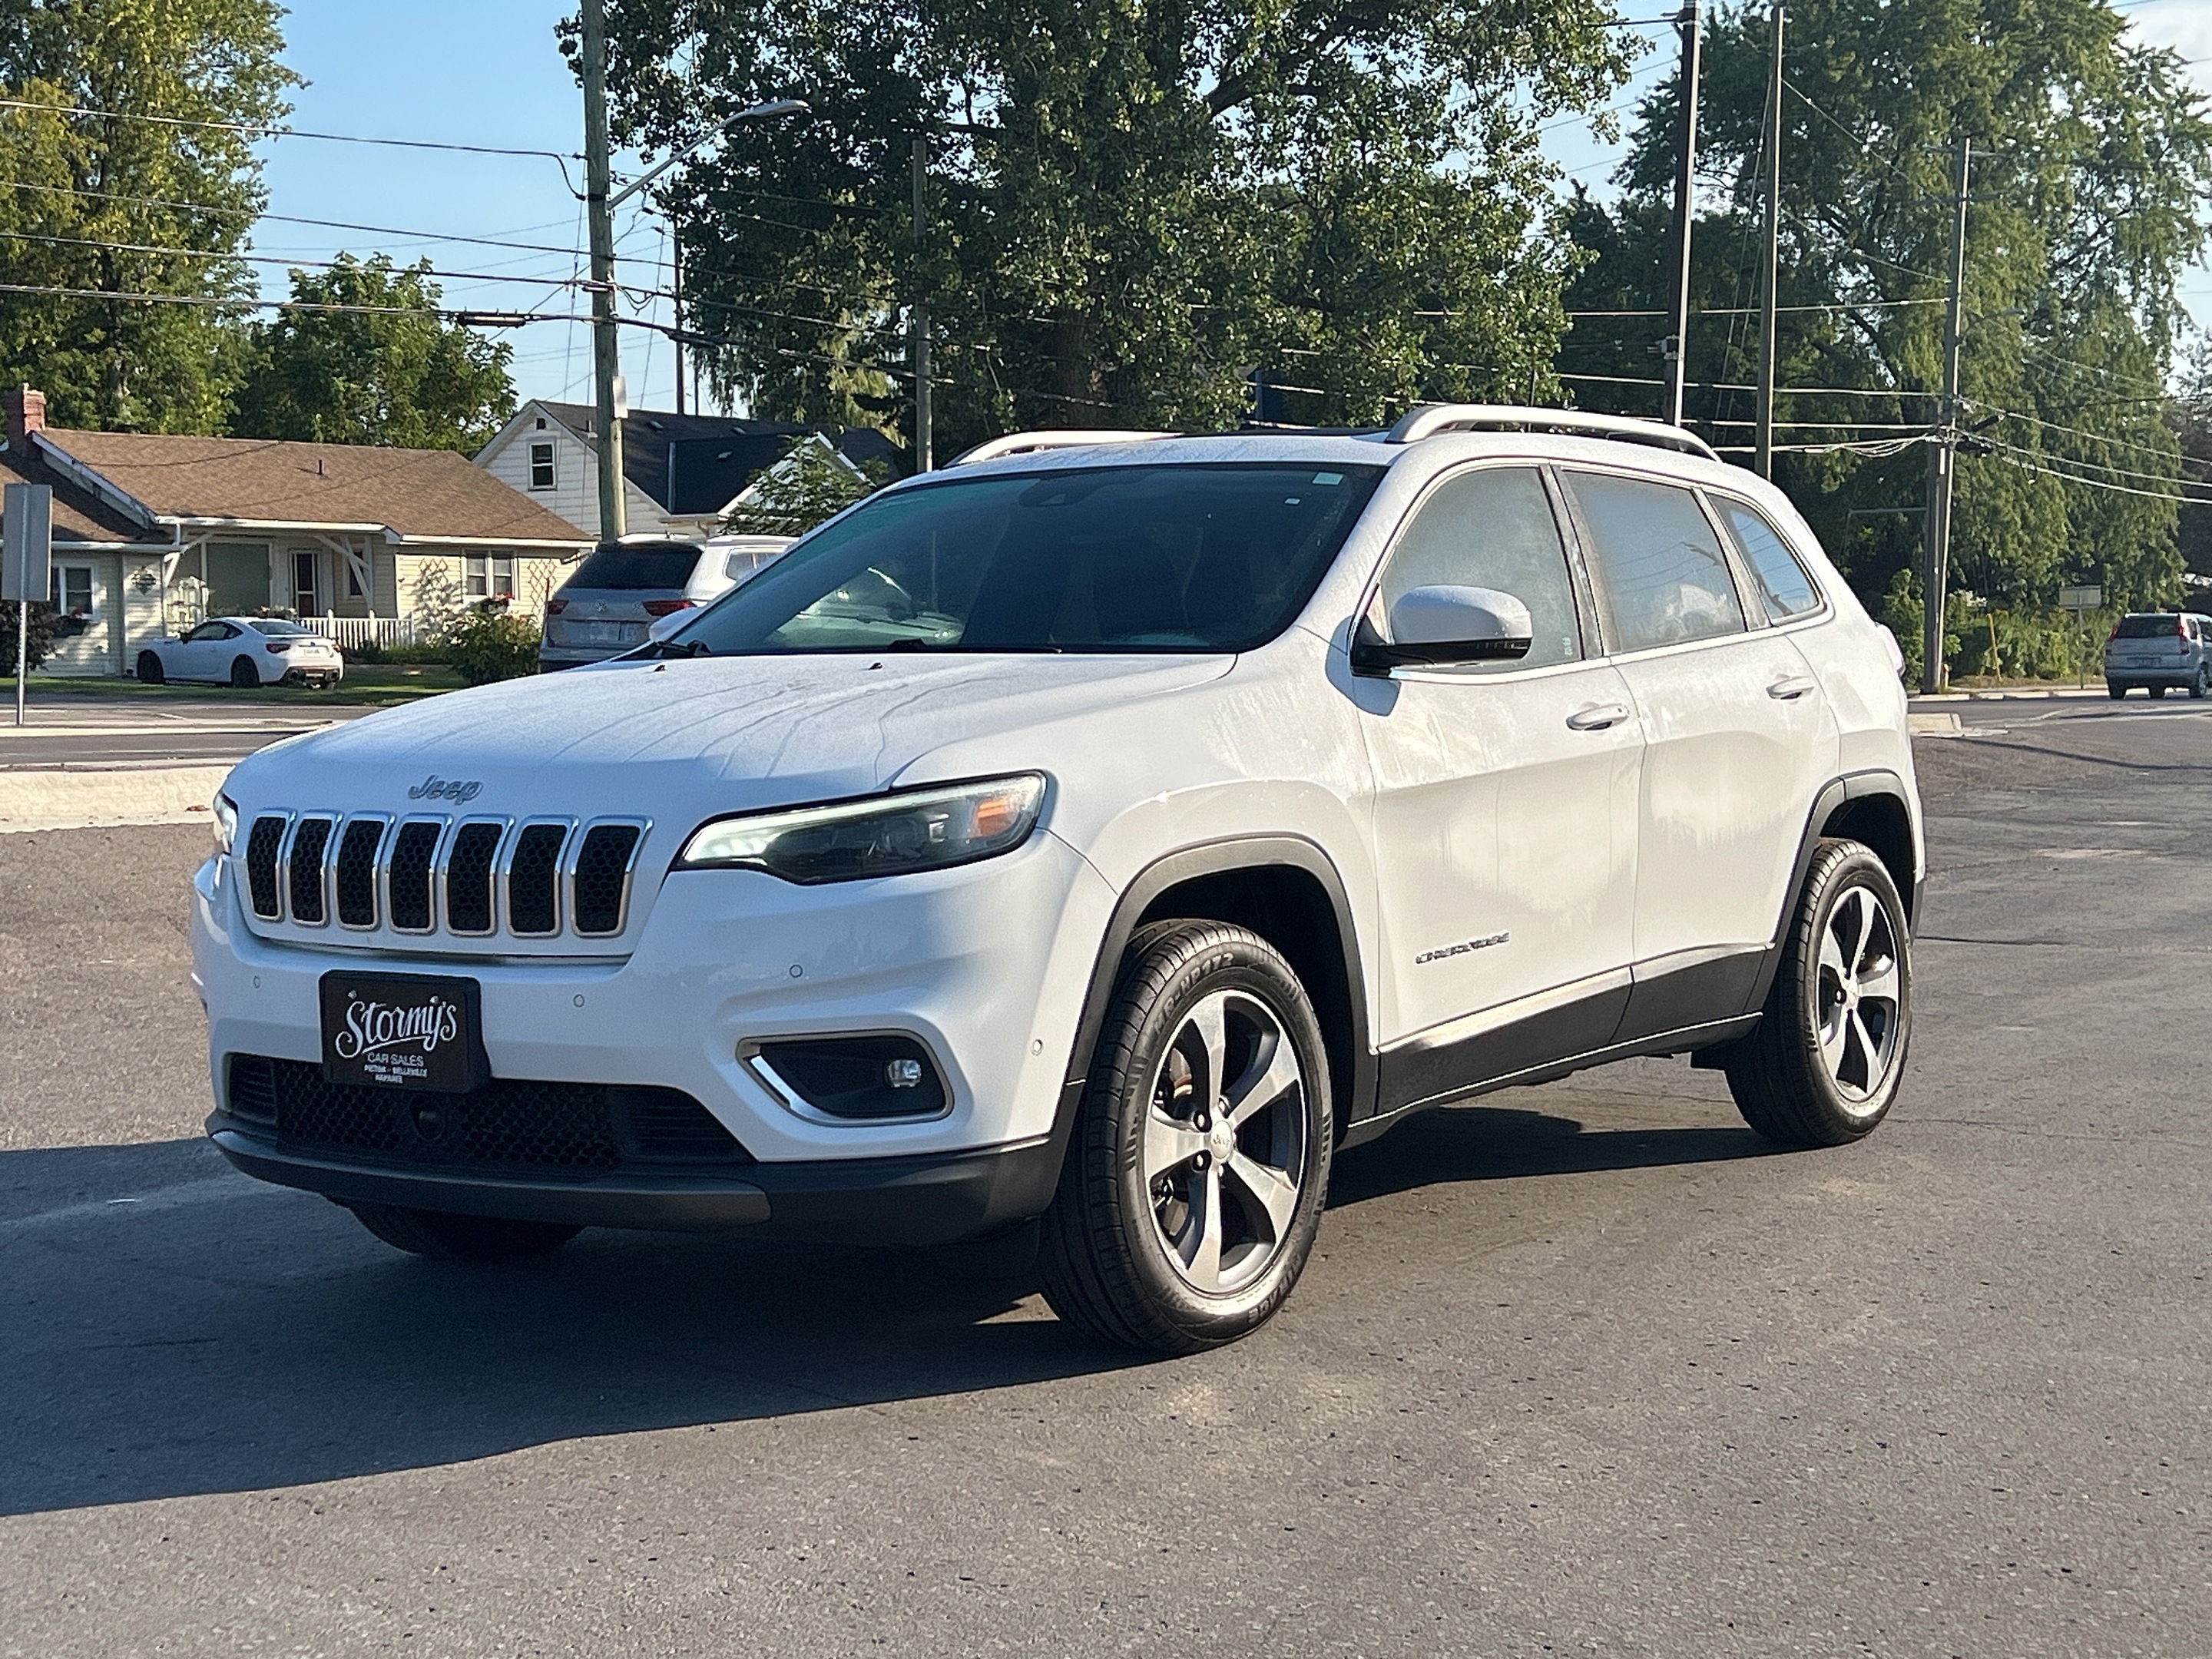 2019 Jeep Cherokee Limited NAV/LEATHER CALL NAPANEE 613-354-2100